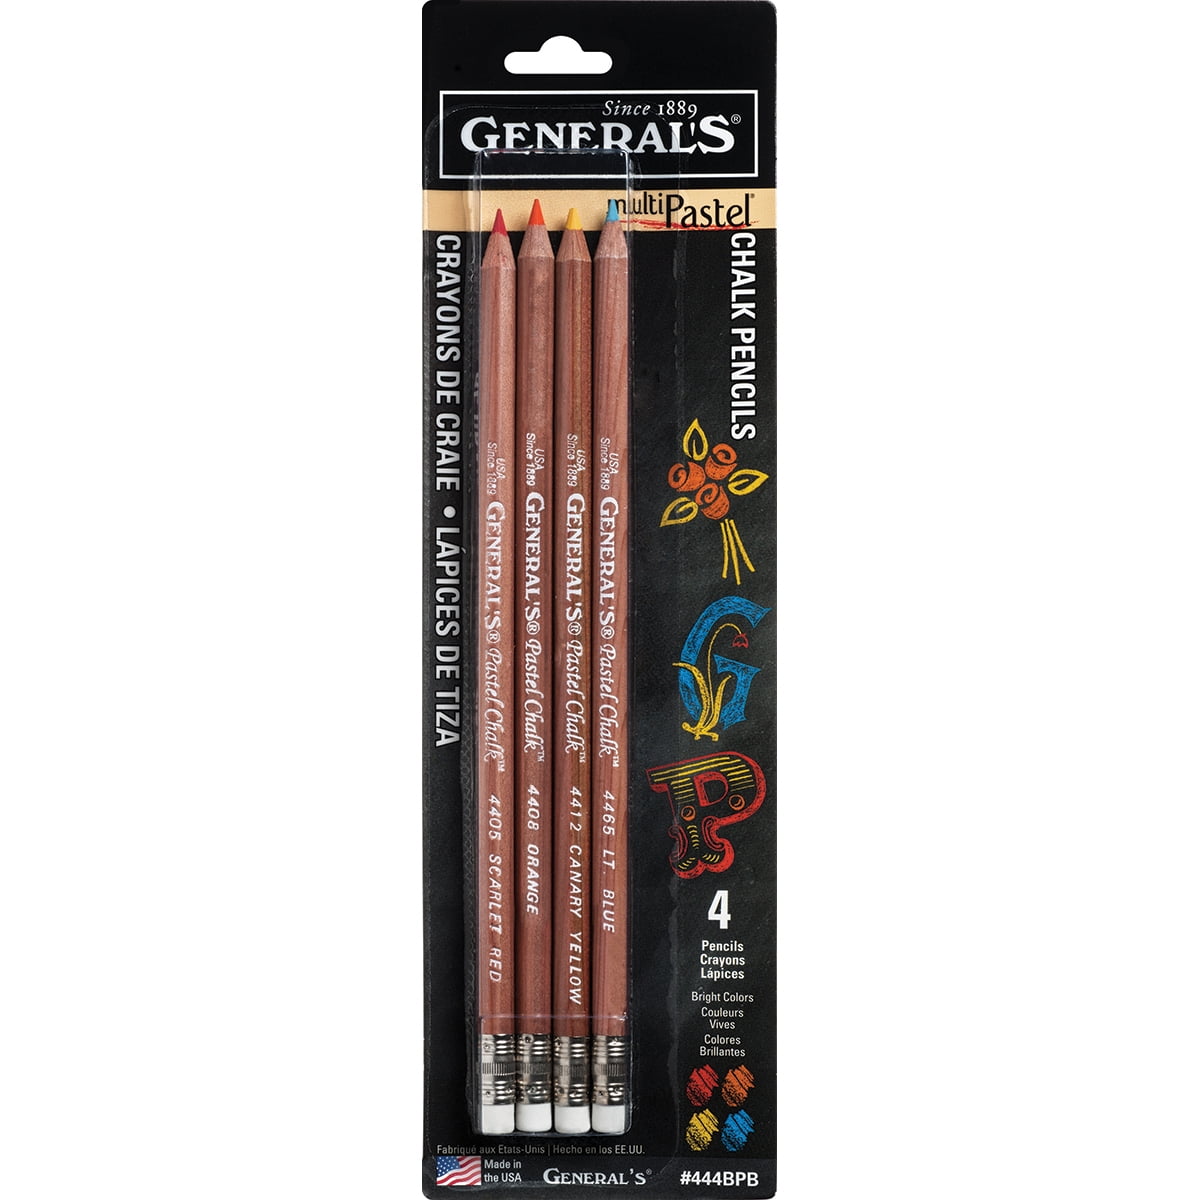 General's White Chalk Pencil